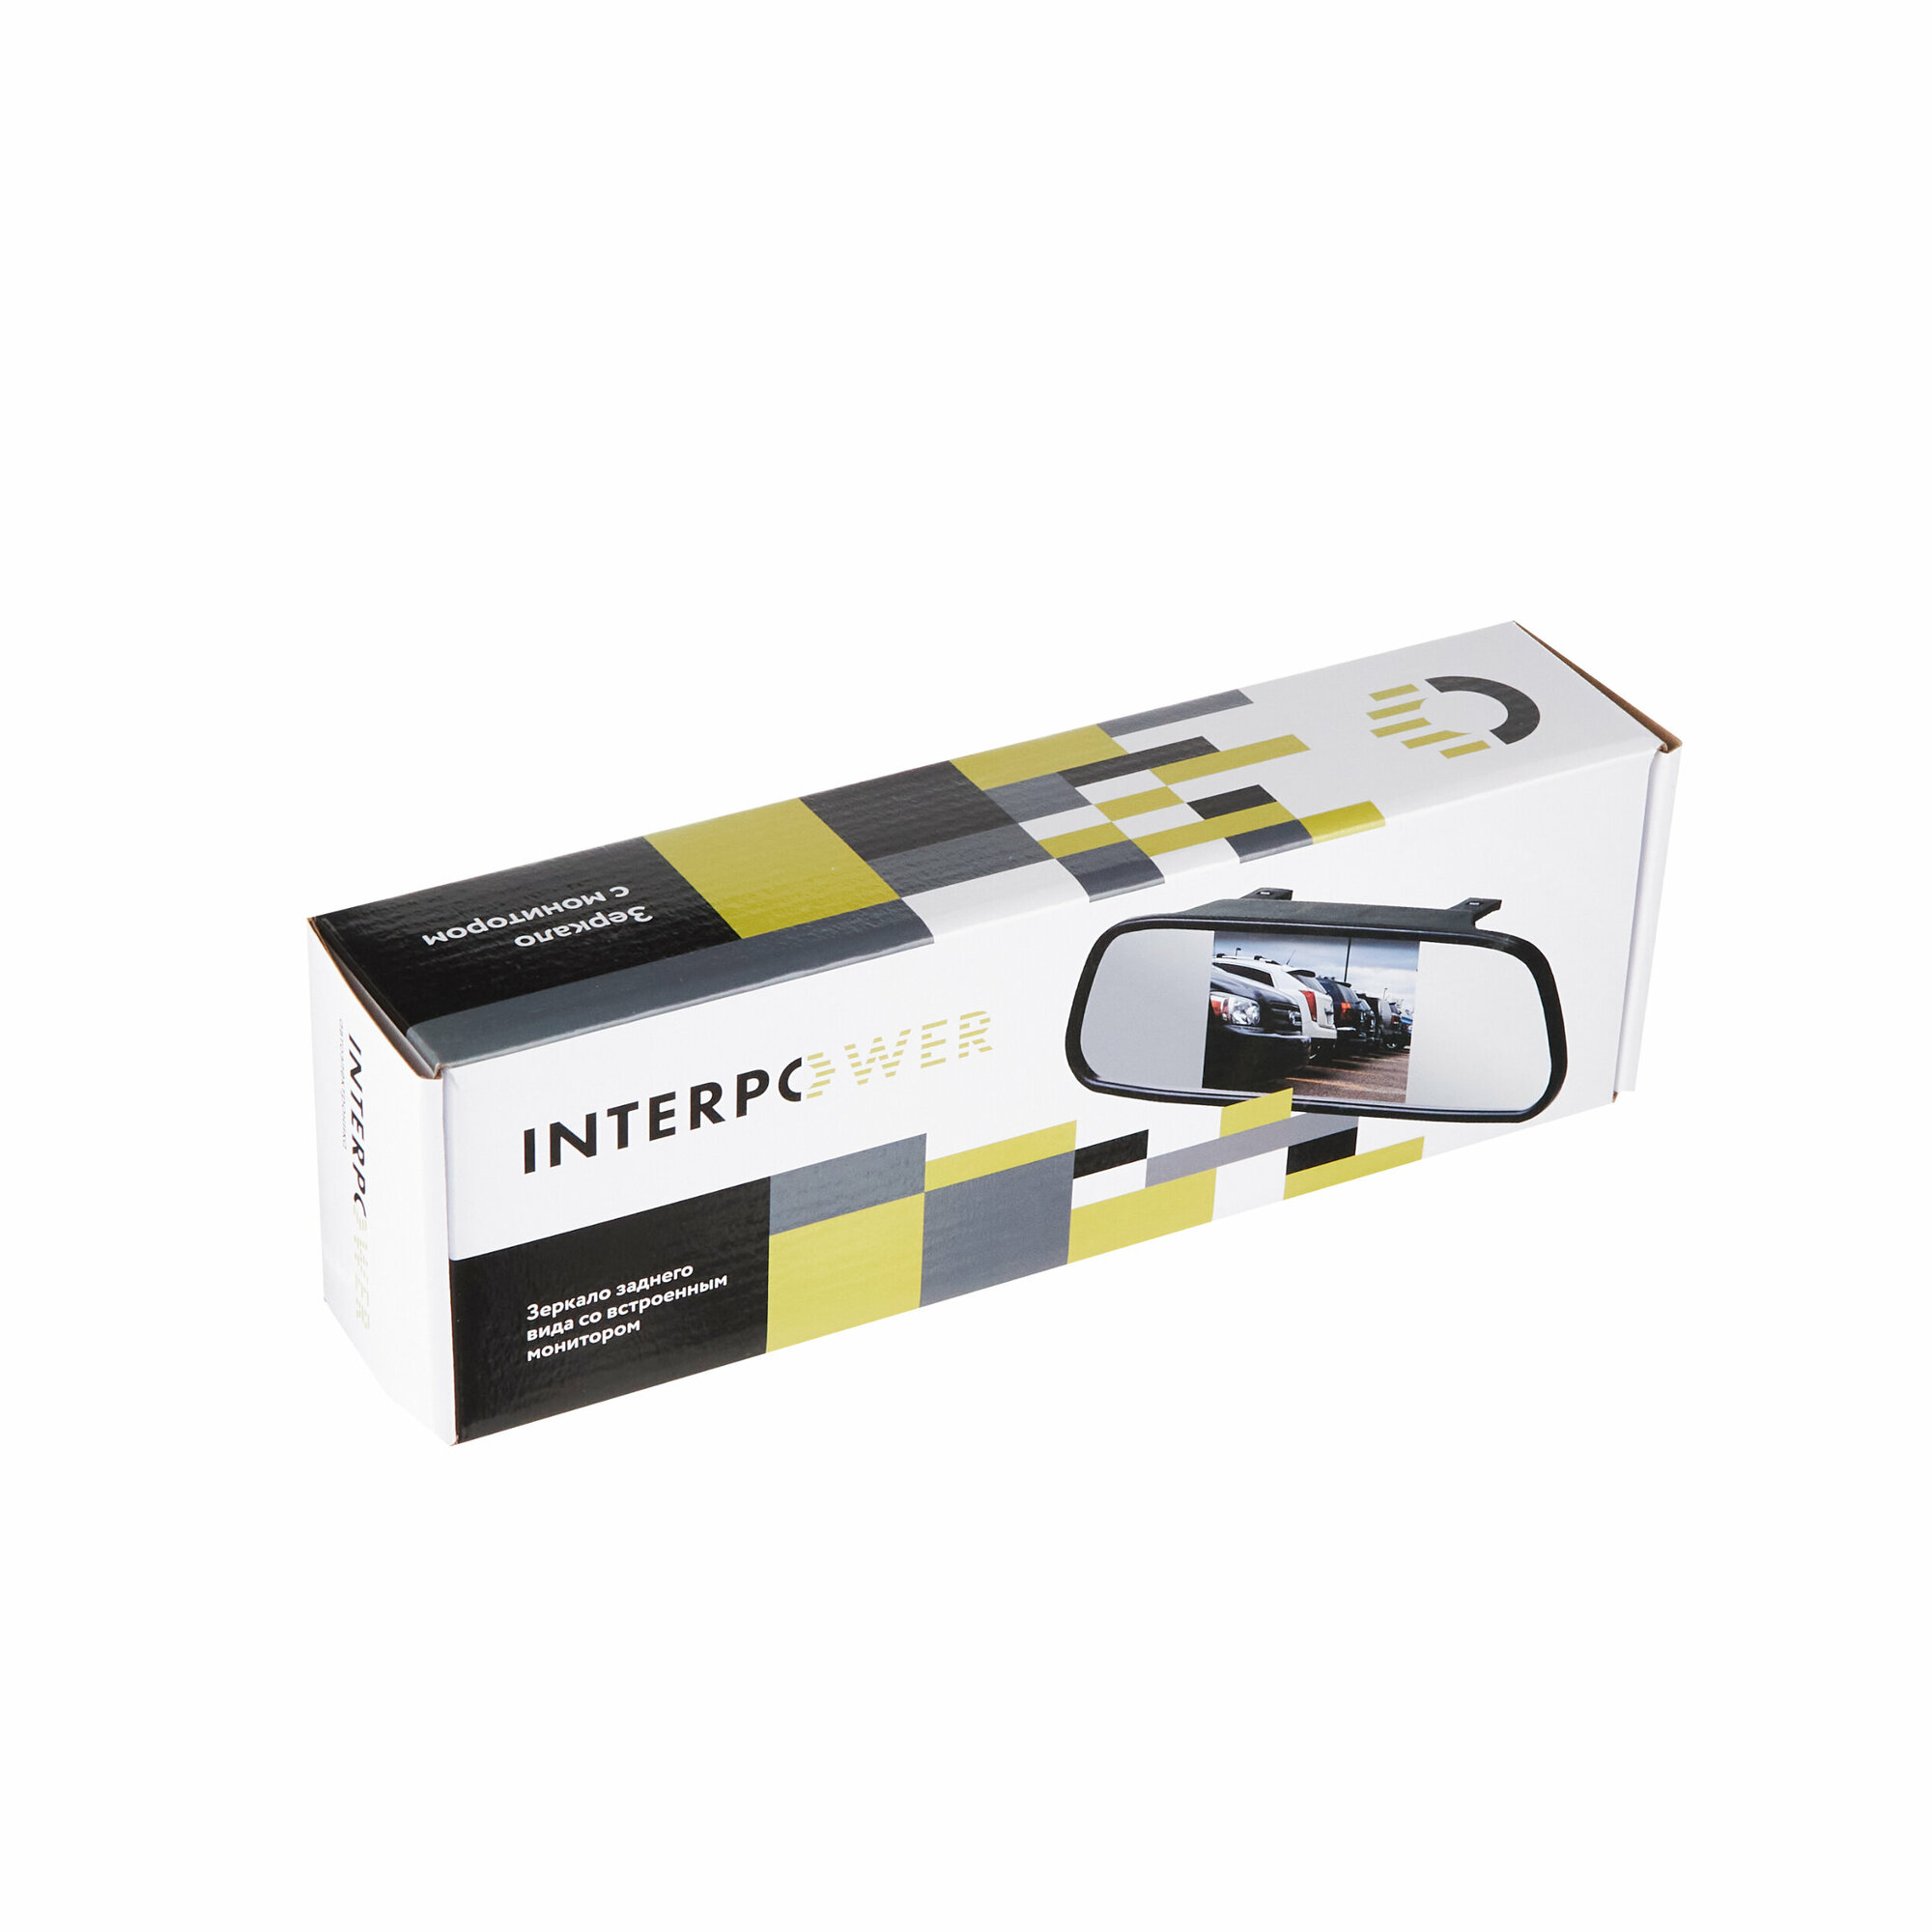 Автомобильный монитор Interpower Silverstone F1 INTERPOWER HD 5"